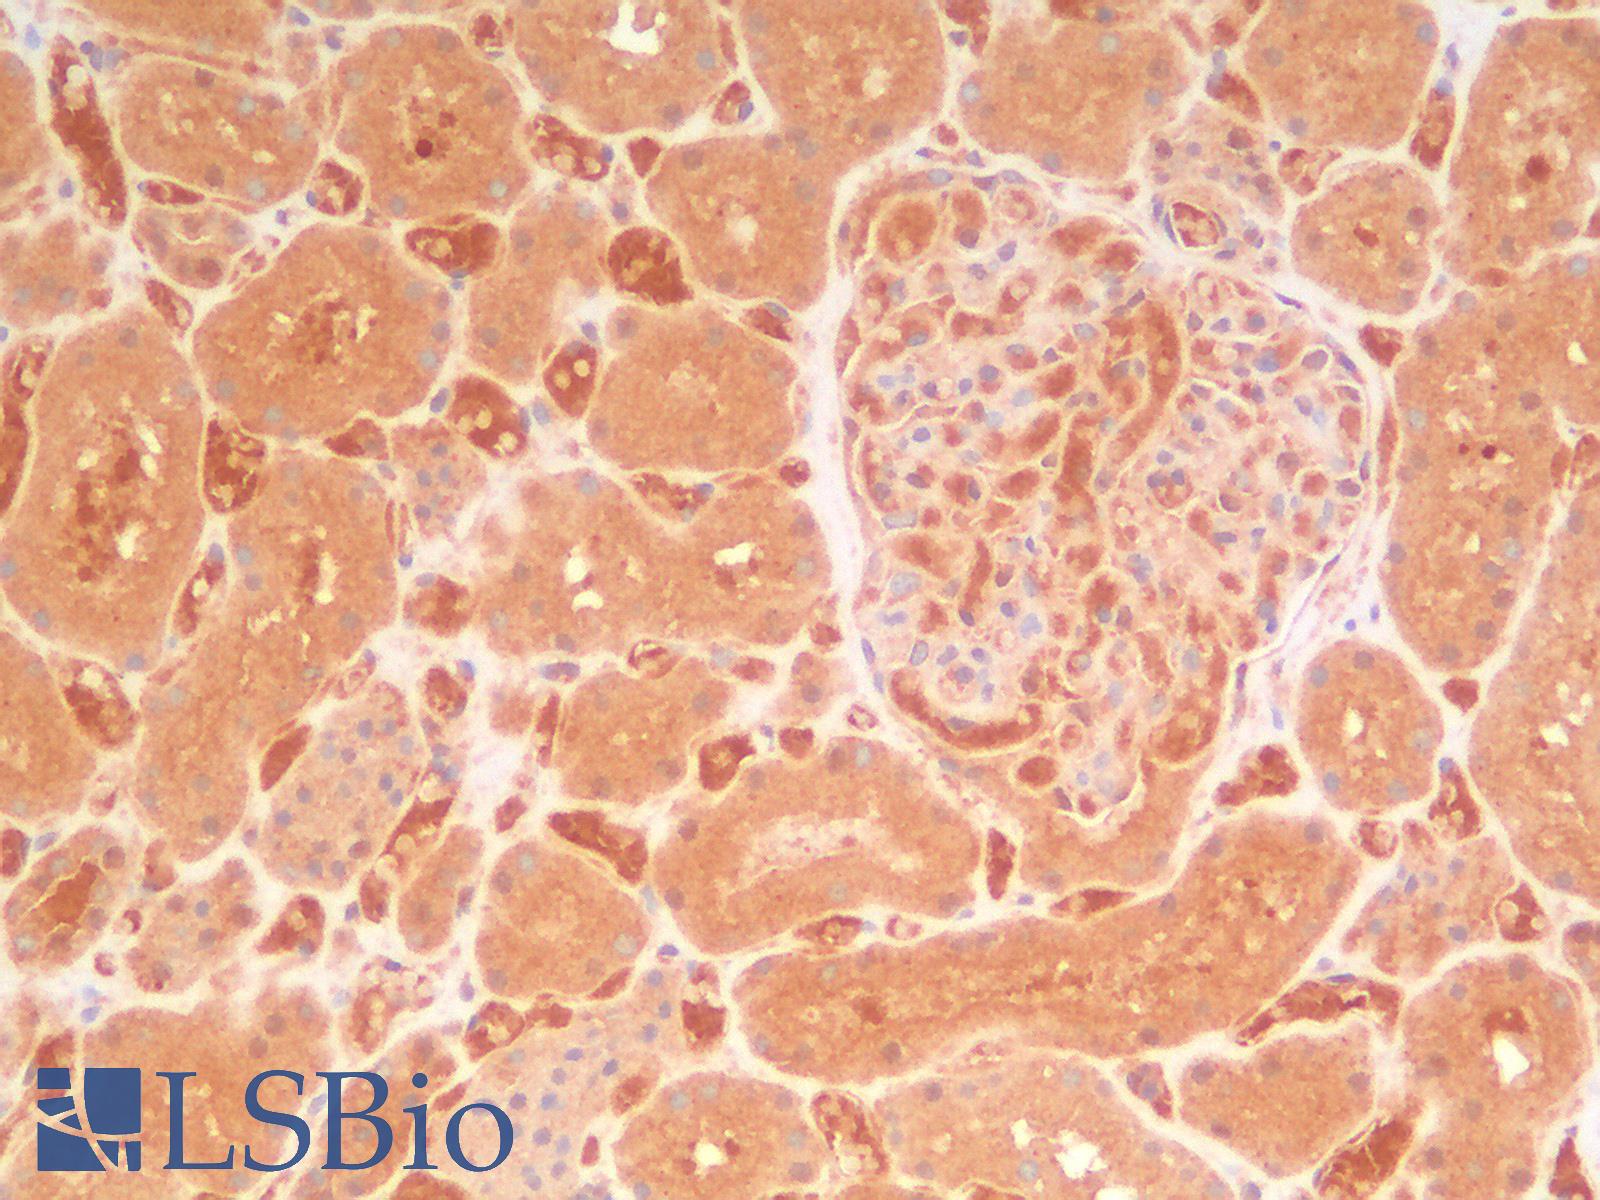 AMACR / P504S Antibody - Human Kidney: Formalin-Fixed, Paraffin-Embedded (FFPE)